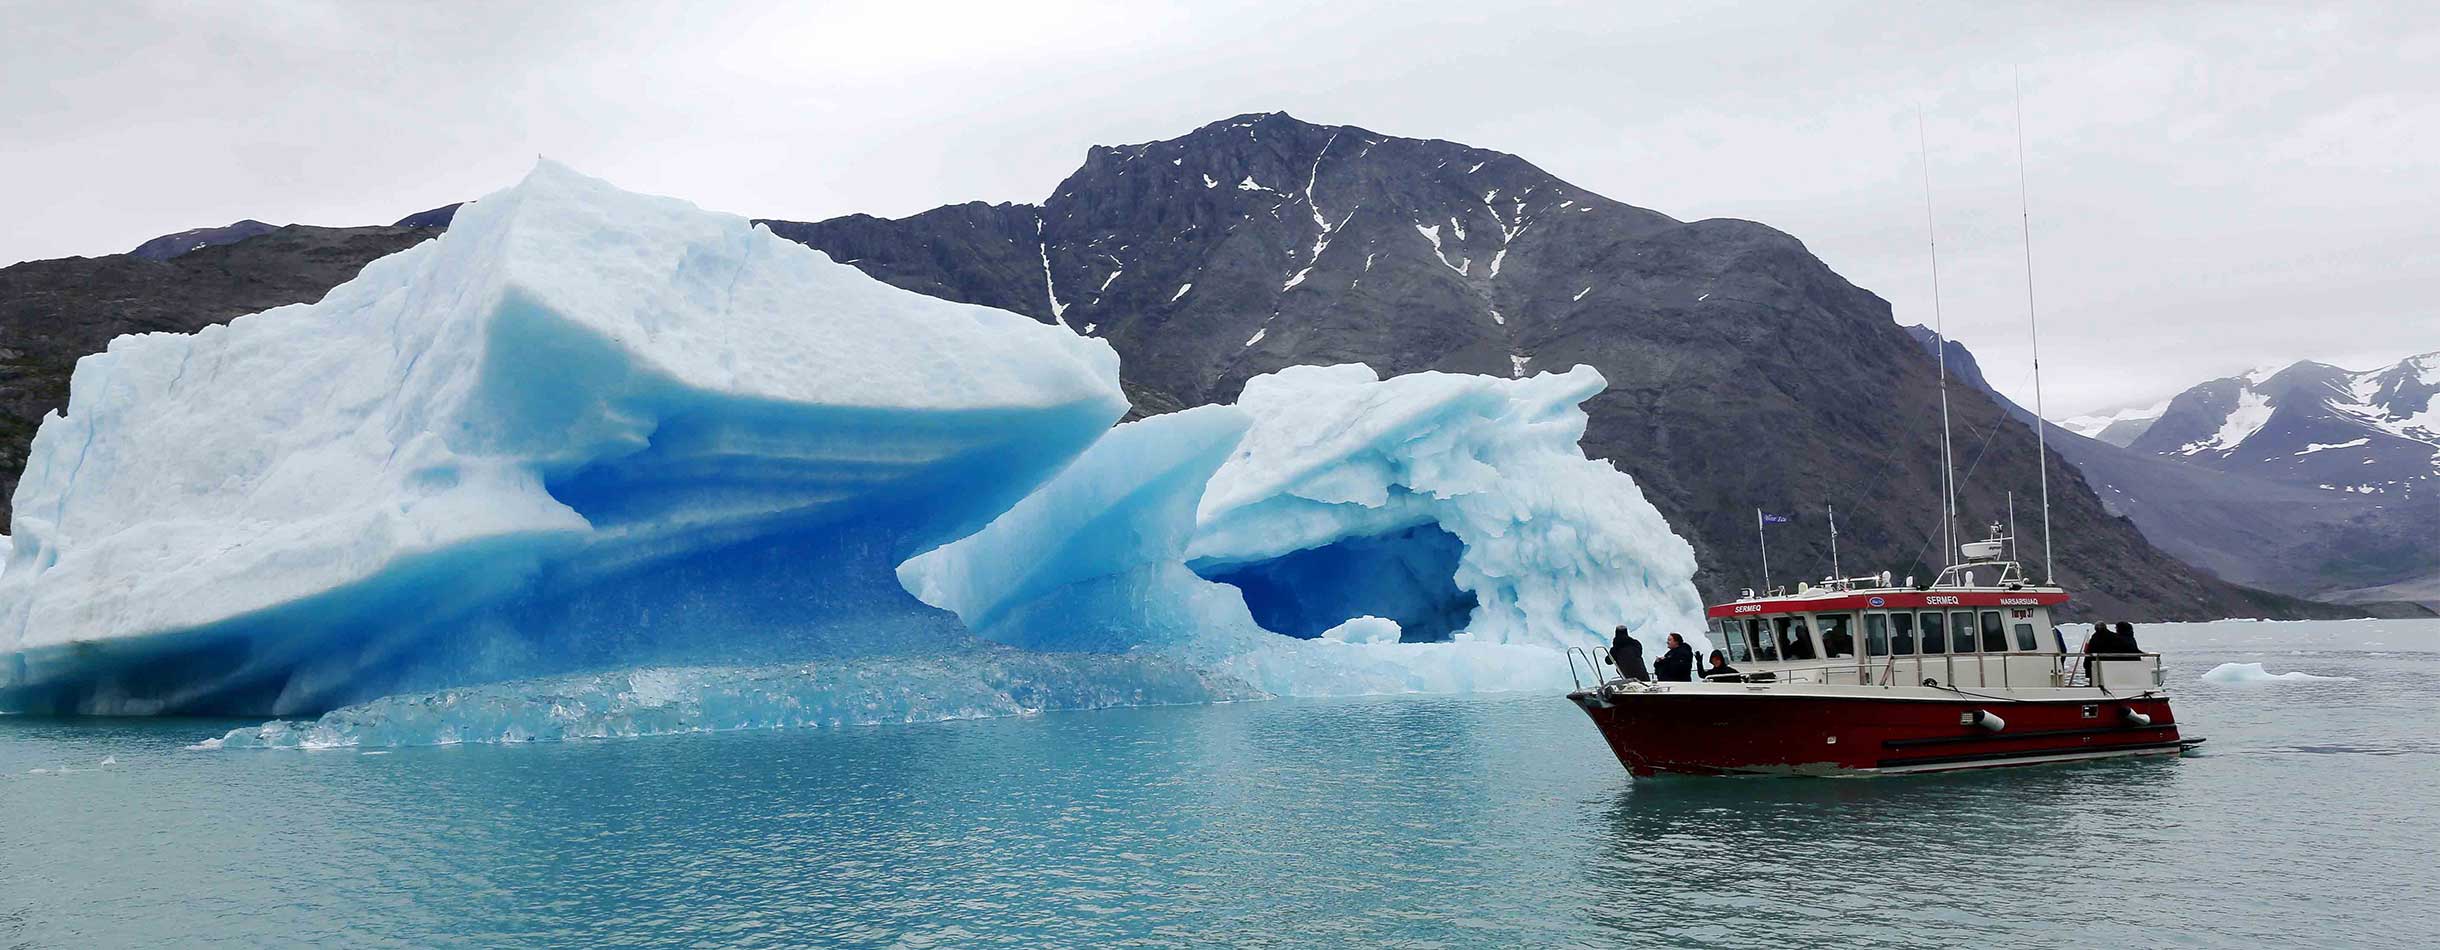 Icebergs in Narsarsuaq, Greenland